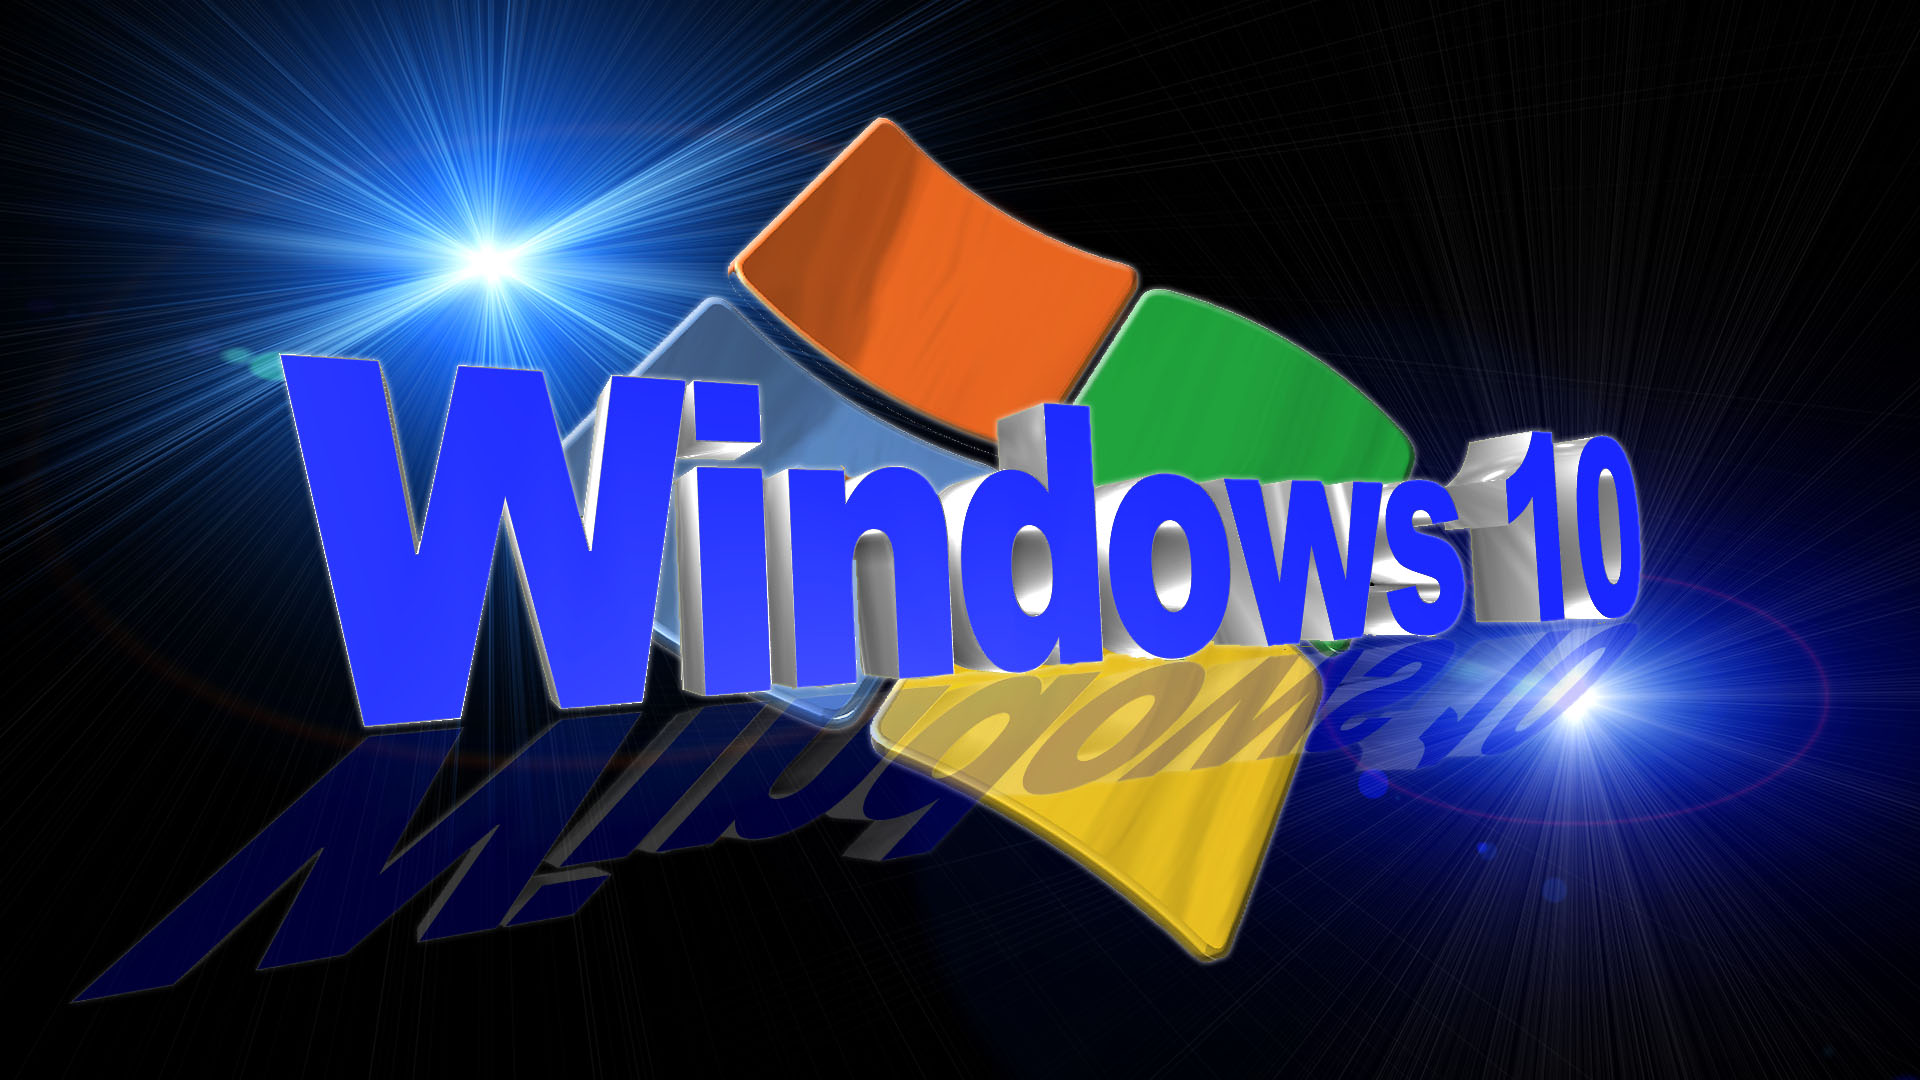 Windows10 by gloglo59